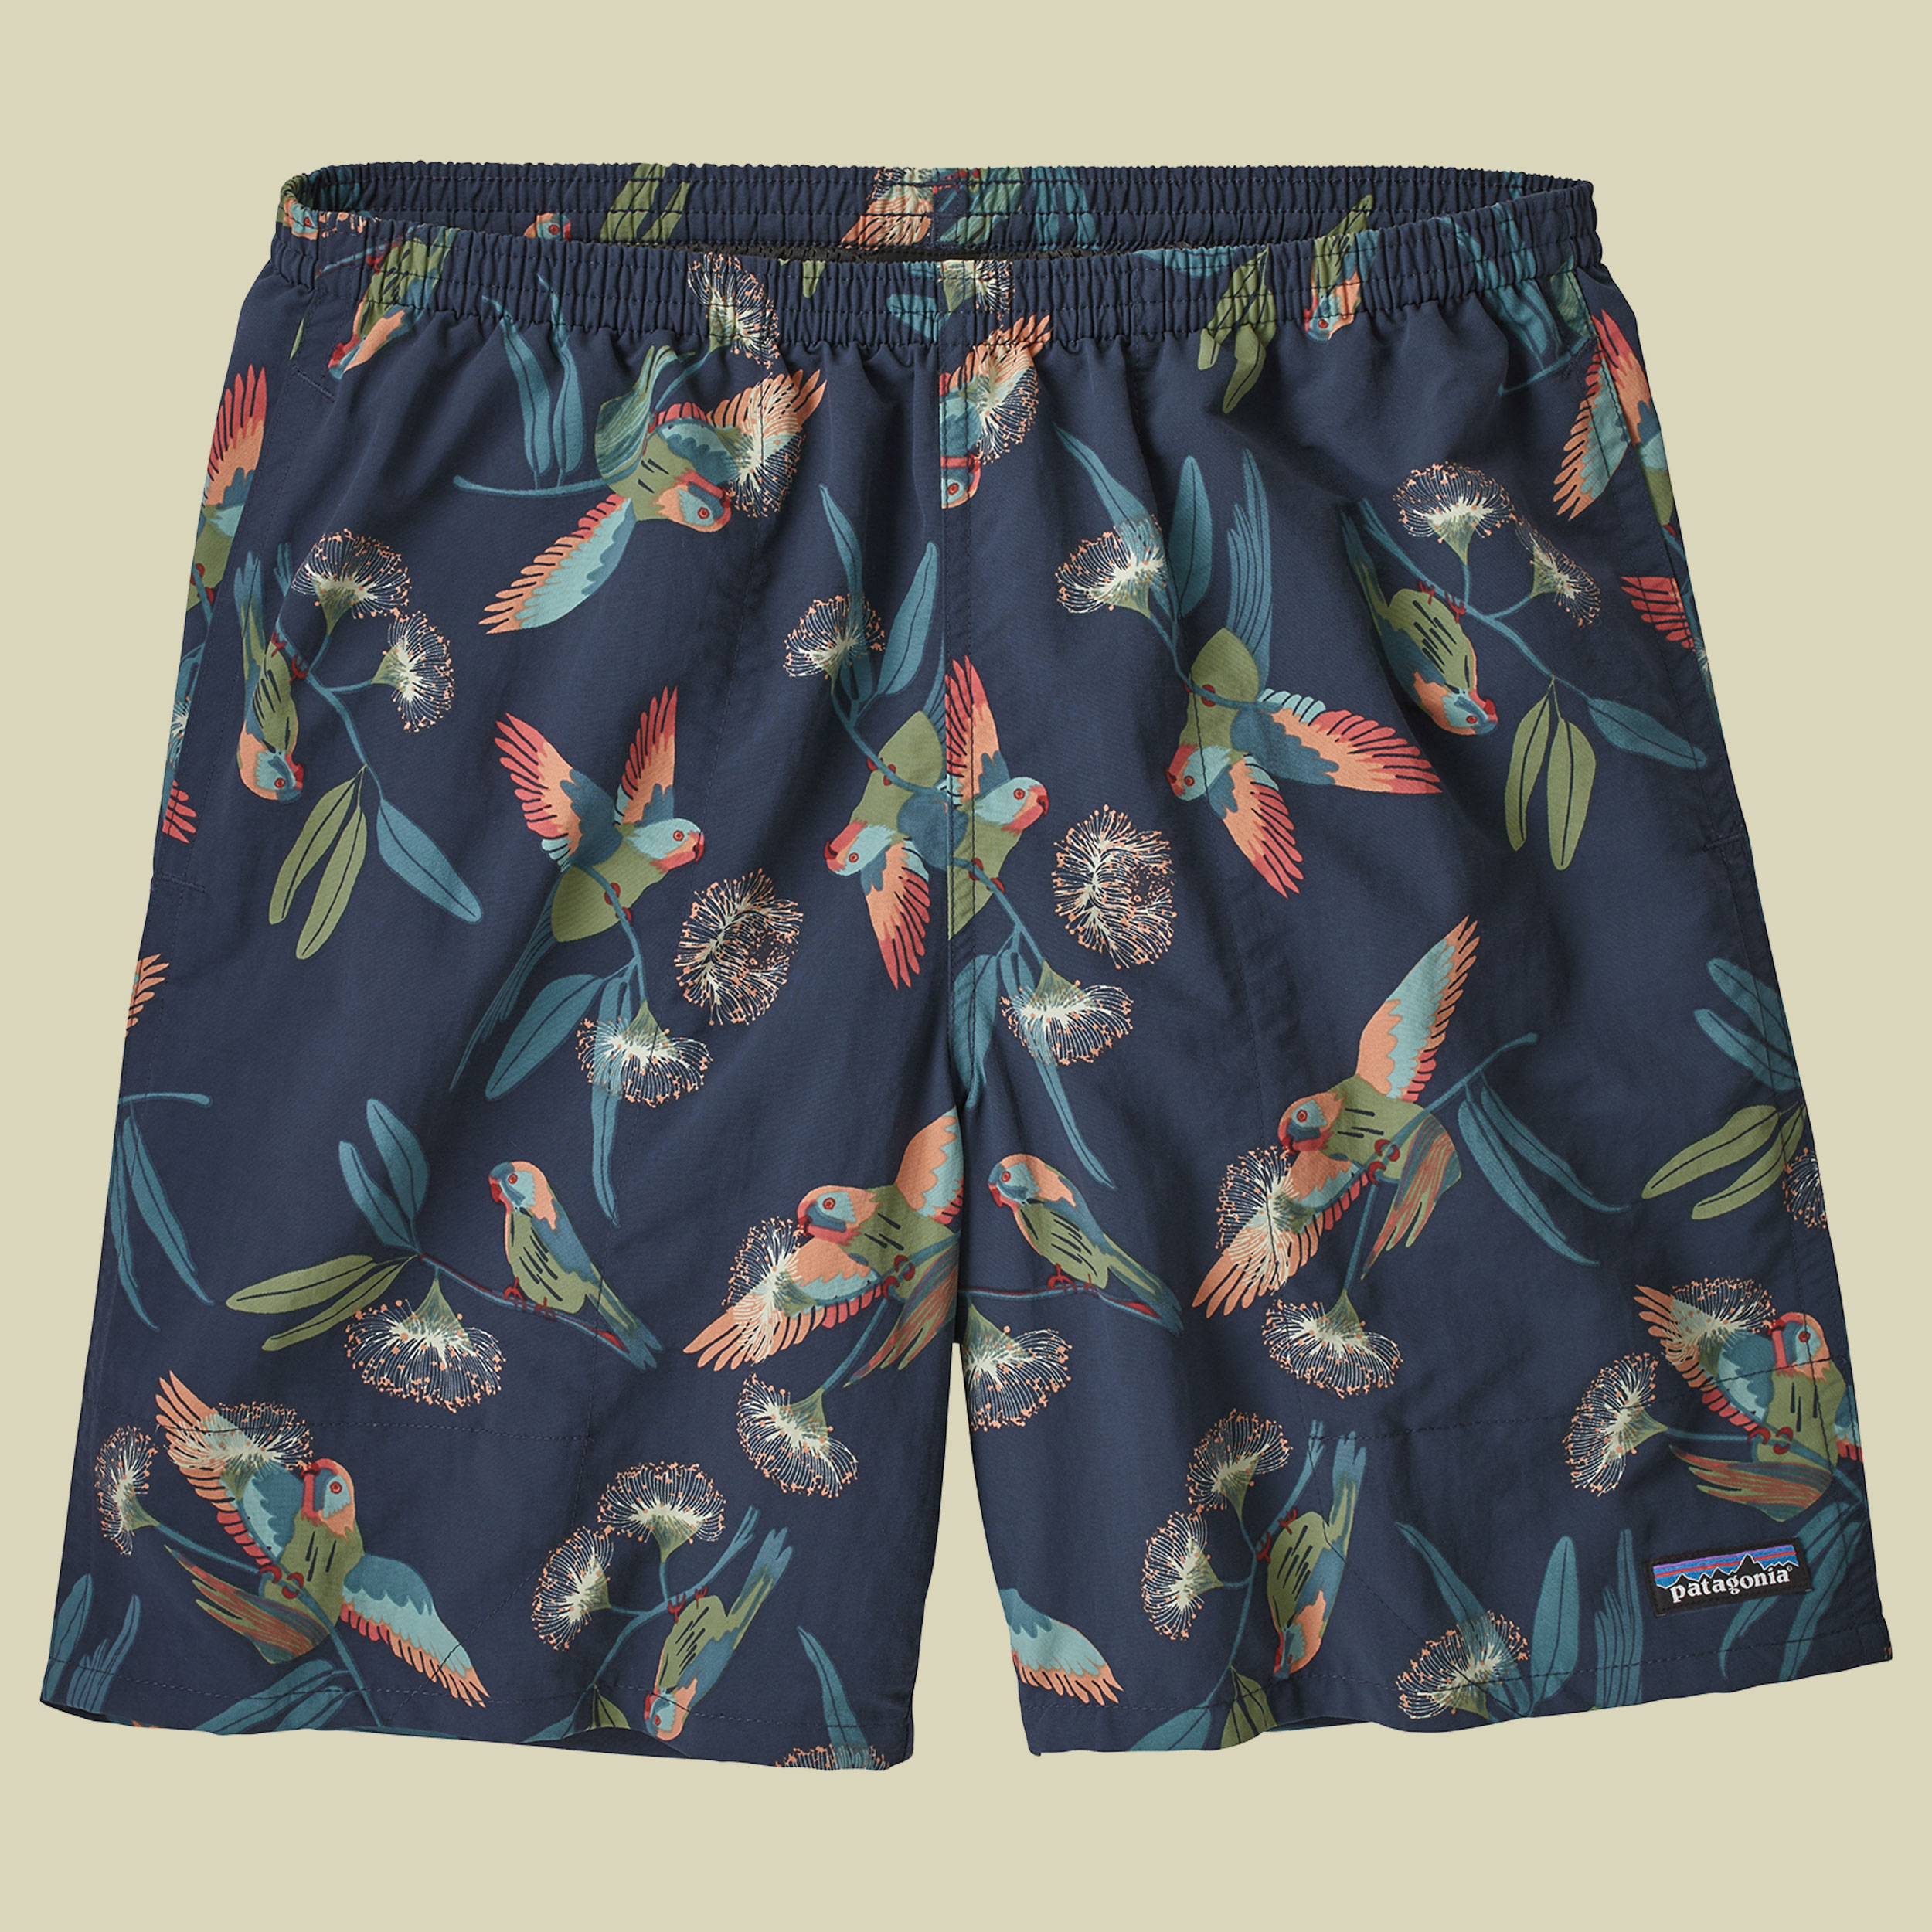 Baggies Longs 7“ Shorts Men Größe L  Farbe parrots/stone blue